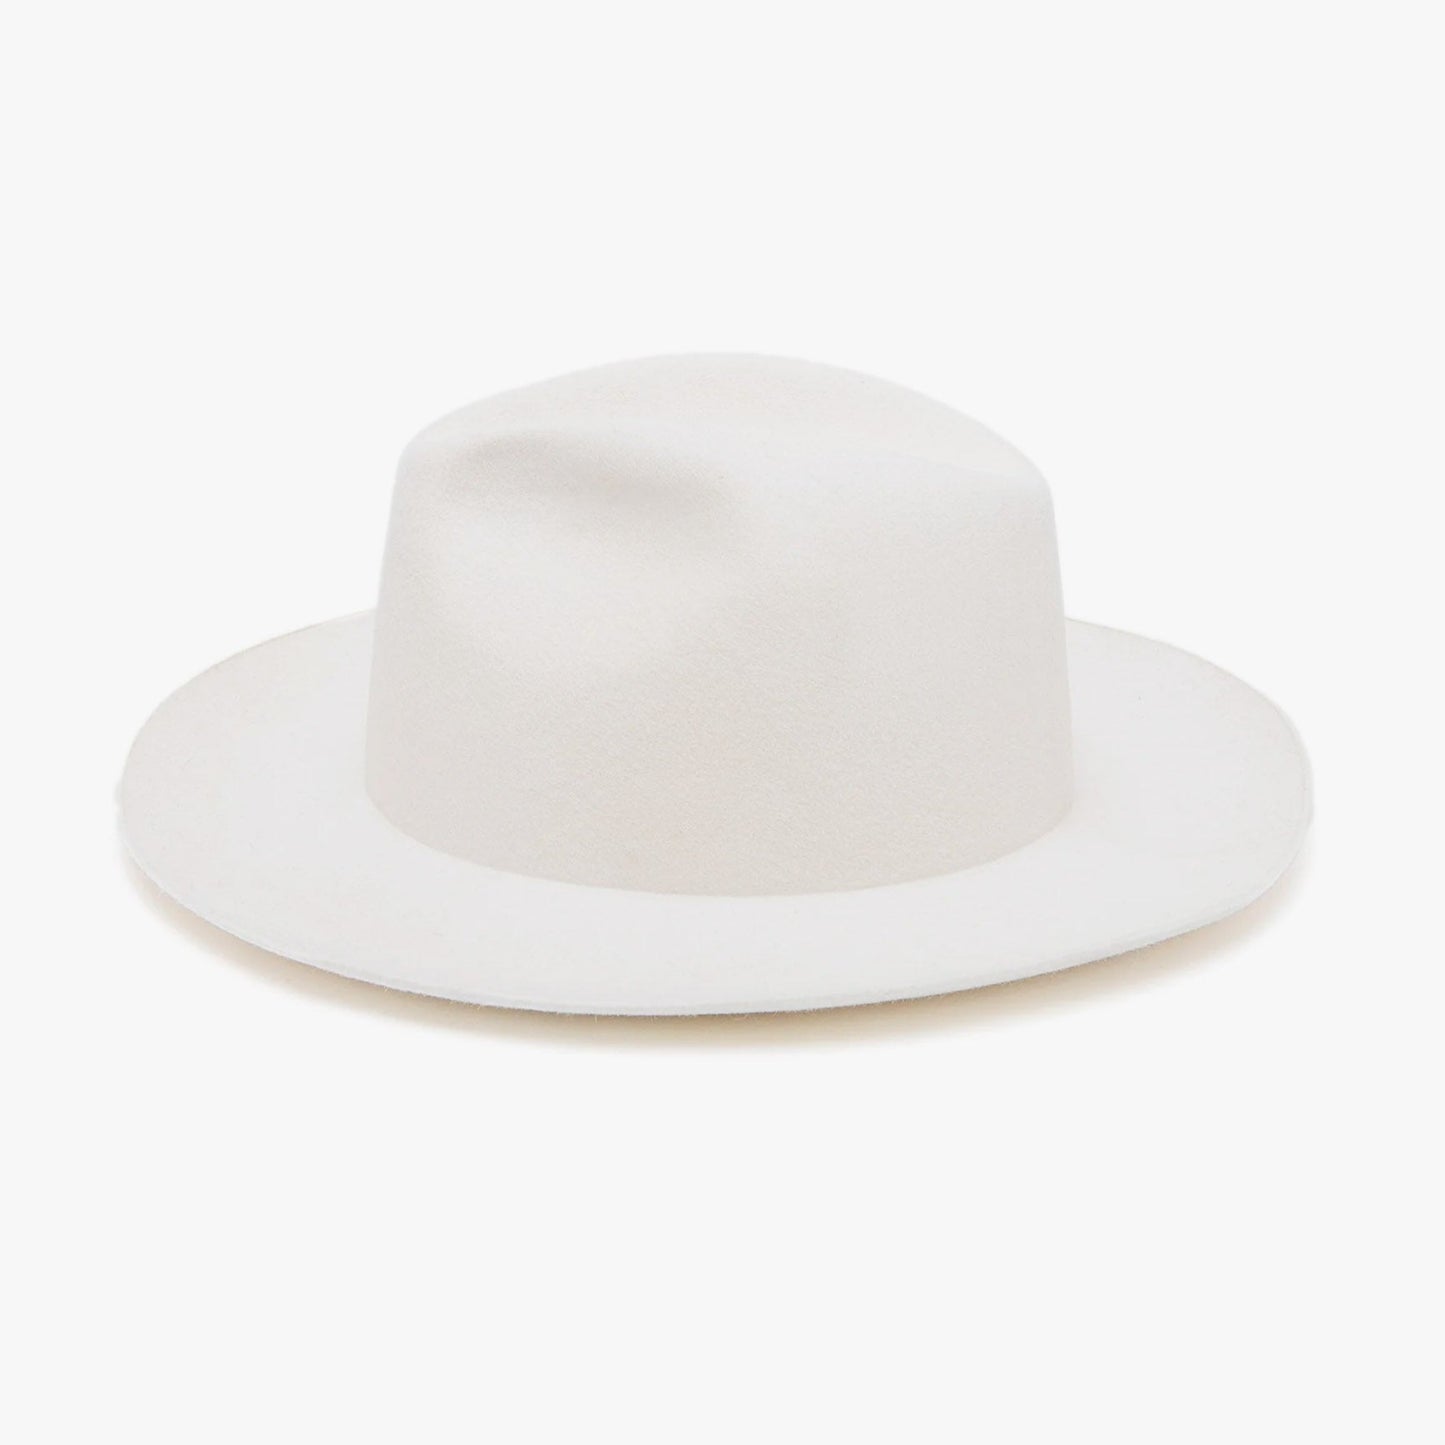 Reinhard Plank White Felt Hat